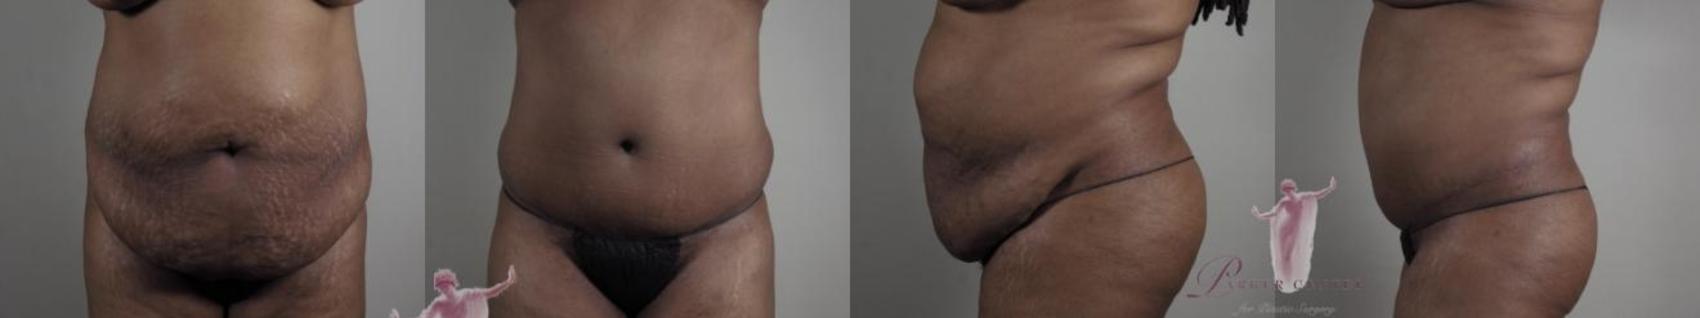 Tummy Tuck Case 1150 Before & After Front | Paramus, NJ | Parker Center for Plastic Surgery